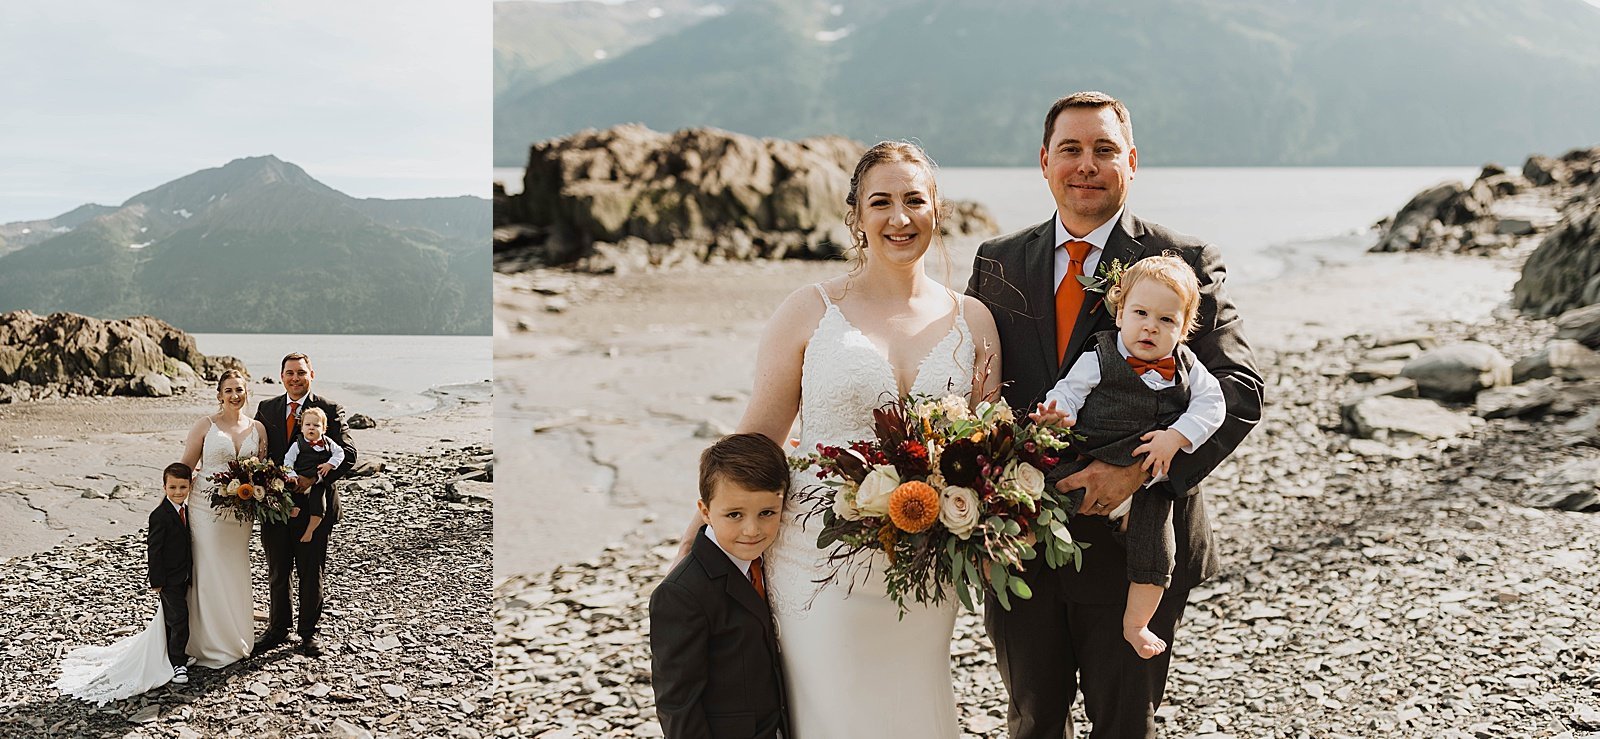  Family portraits at intimate wedding by Alaska wedding photographer Theresa McDonald 